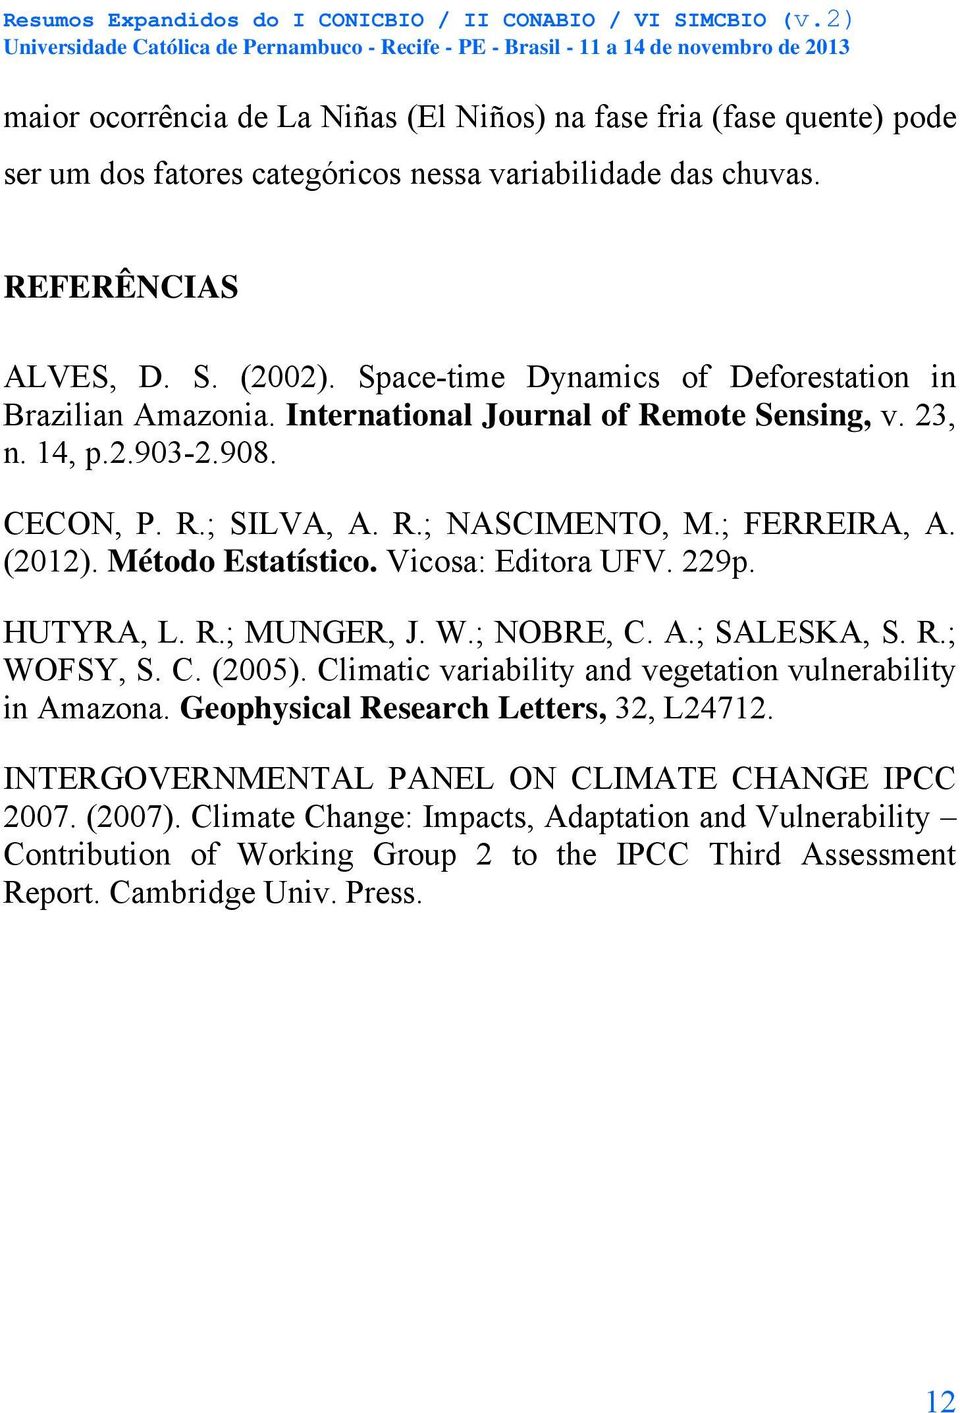 Método Estatístico. Vicosa: Editora UFV. 9p. HUTYRA, L. R.; MUNGER, J. W.; NOBRE, C. A.; SALESKA, S. R.; WOFSY, S. C. (005). Climatic variability and vegetation vulnerability in Amazona.